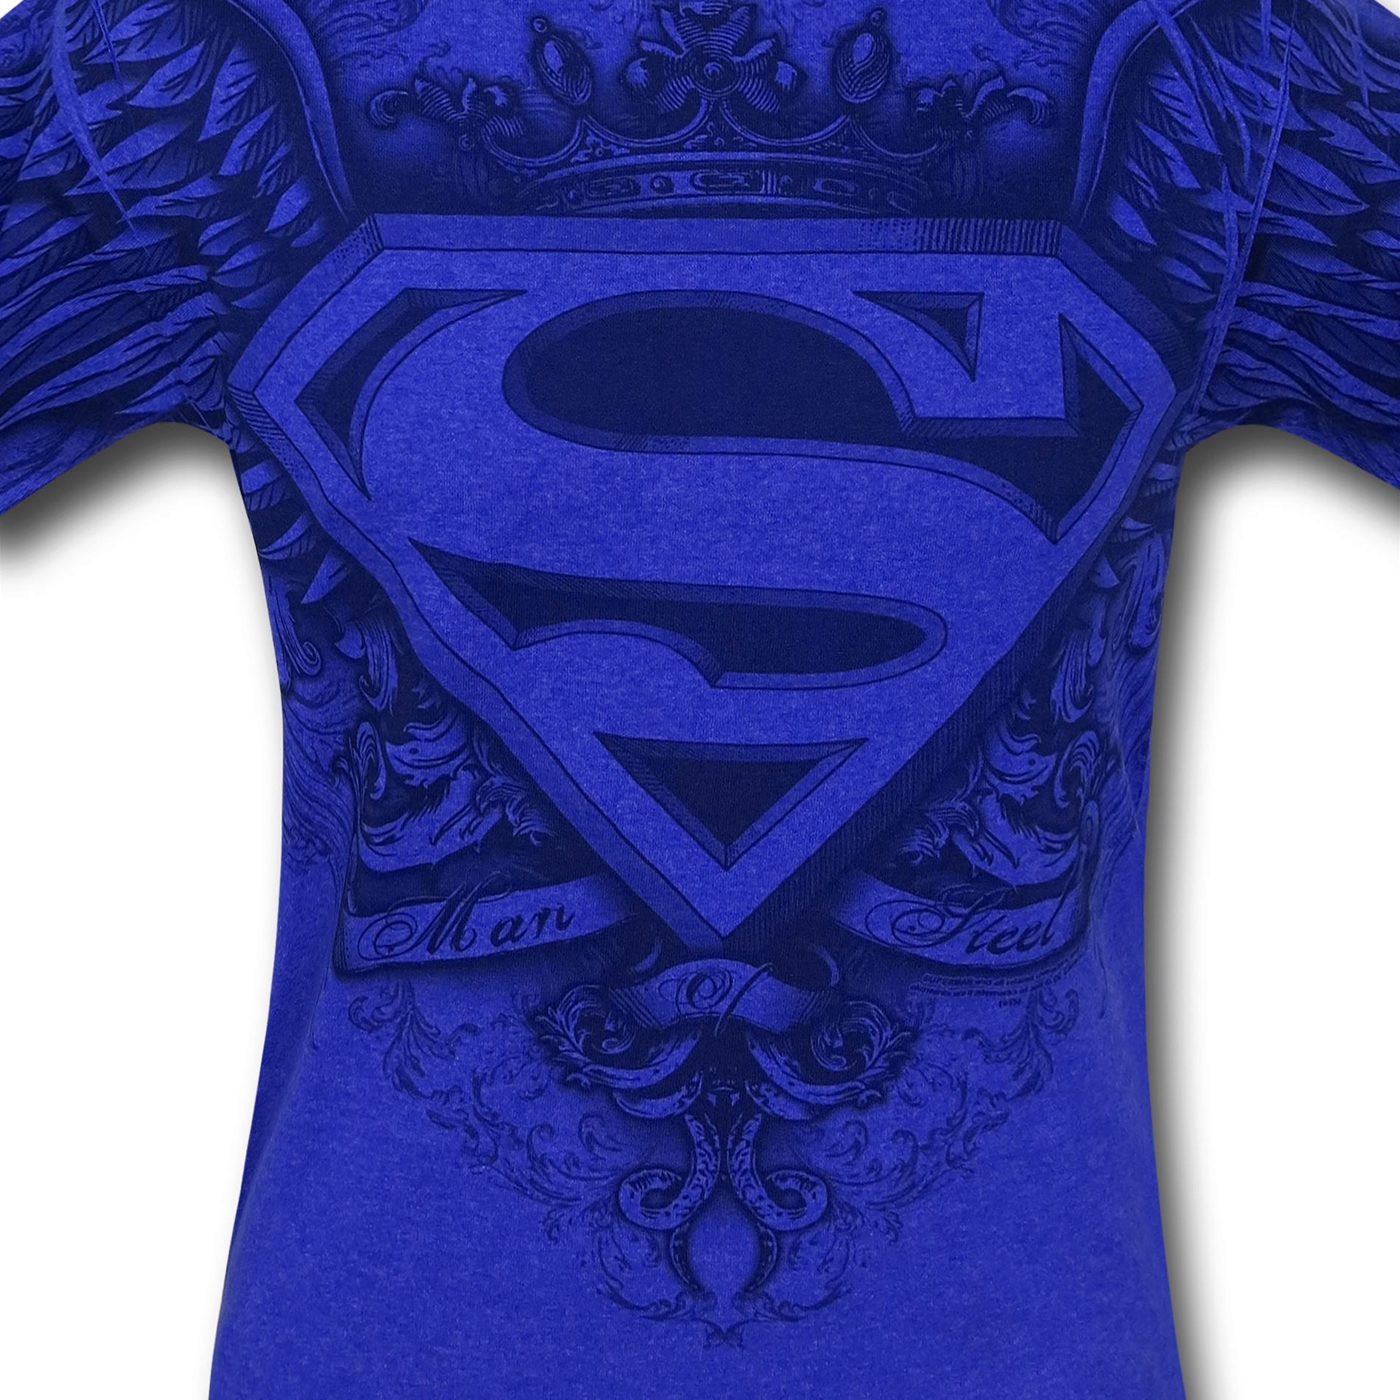 Superman Winged Symbol Blue Sublimated T-Shirt